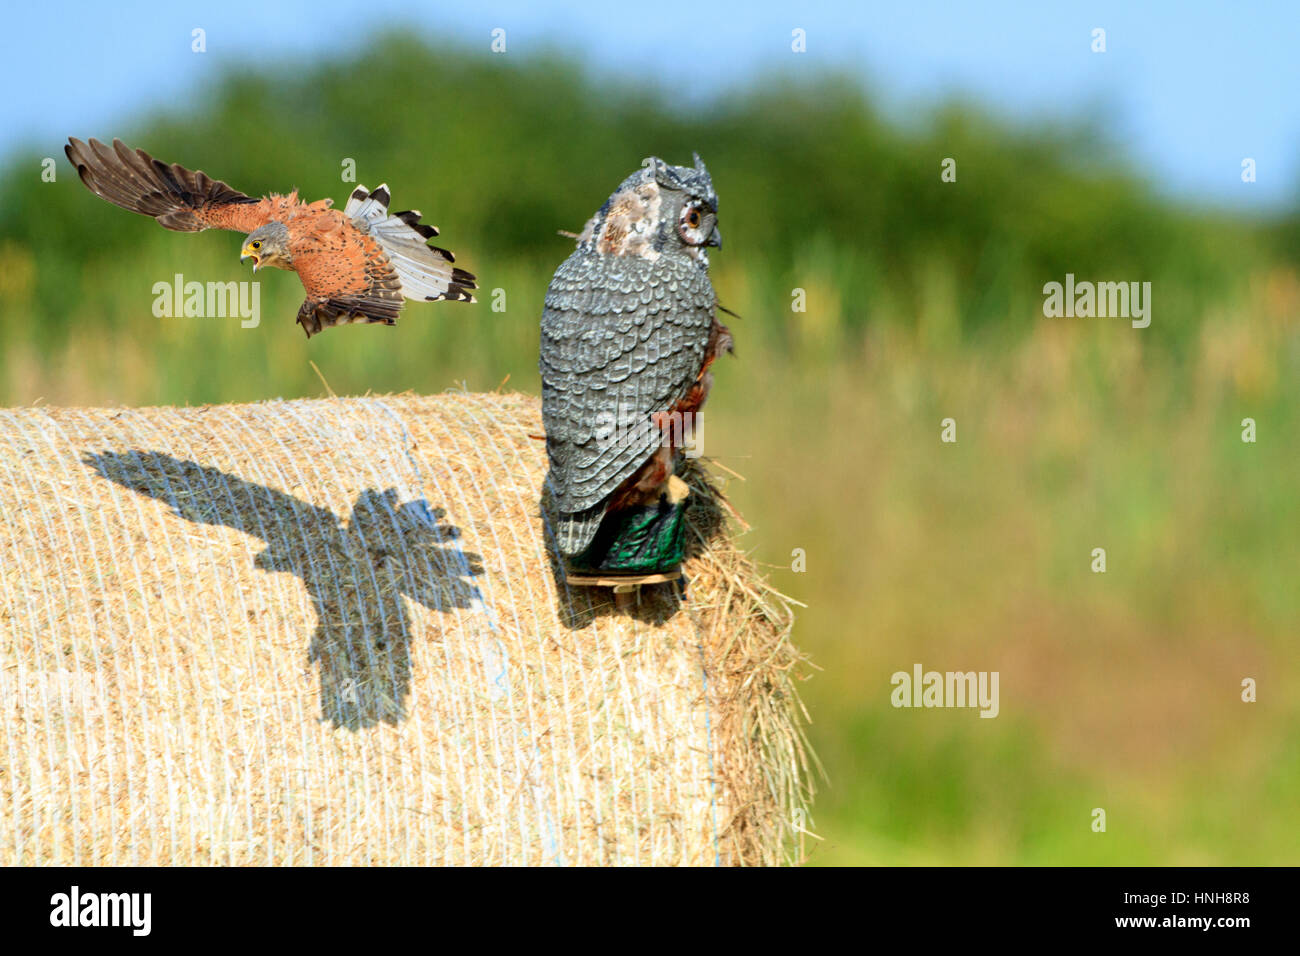 Cernícalo vulgar ( Falco tinnunculus) atacar un señuelo owl. La fotografía de aves. Foto de stock